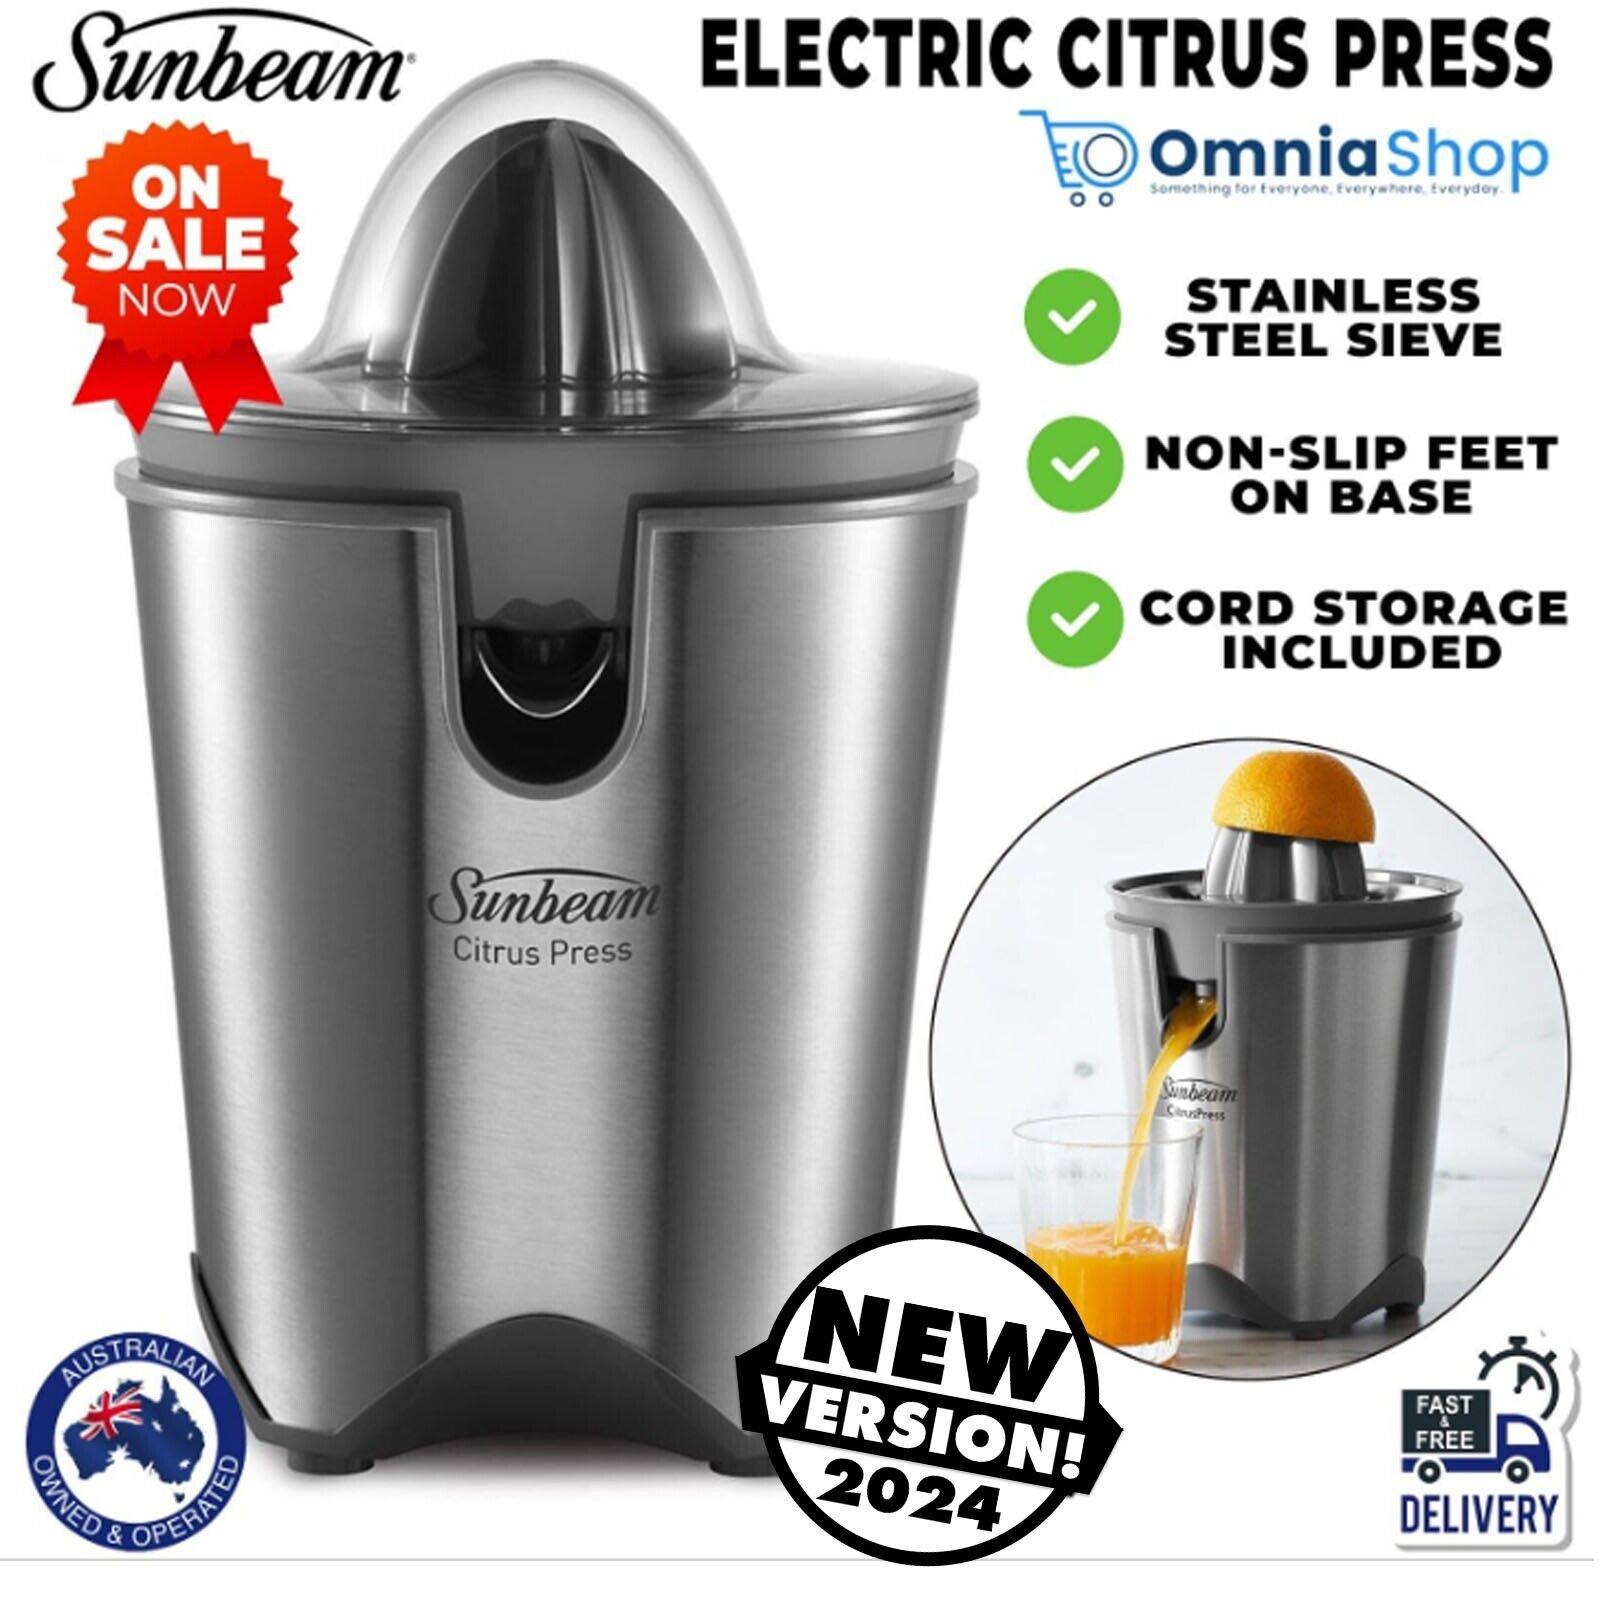 Sunbeam Electric Juice Press Juicer Citrus Orange Lime Juicing Machine Tool